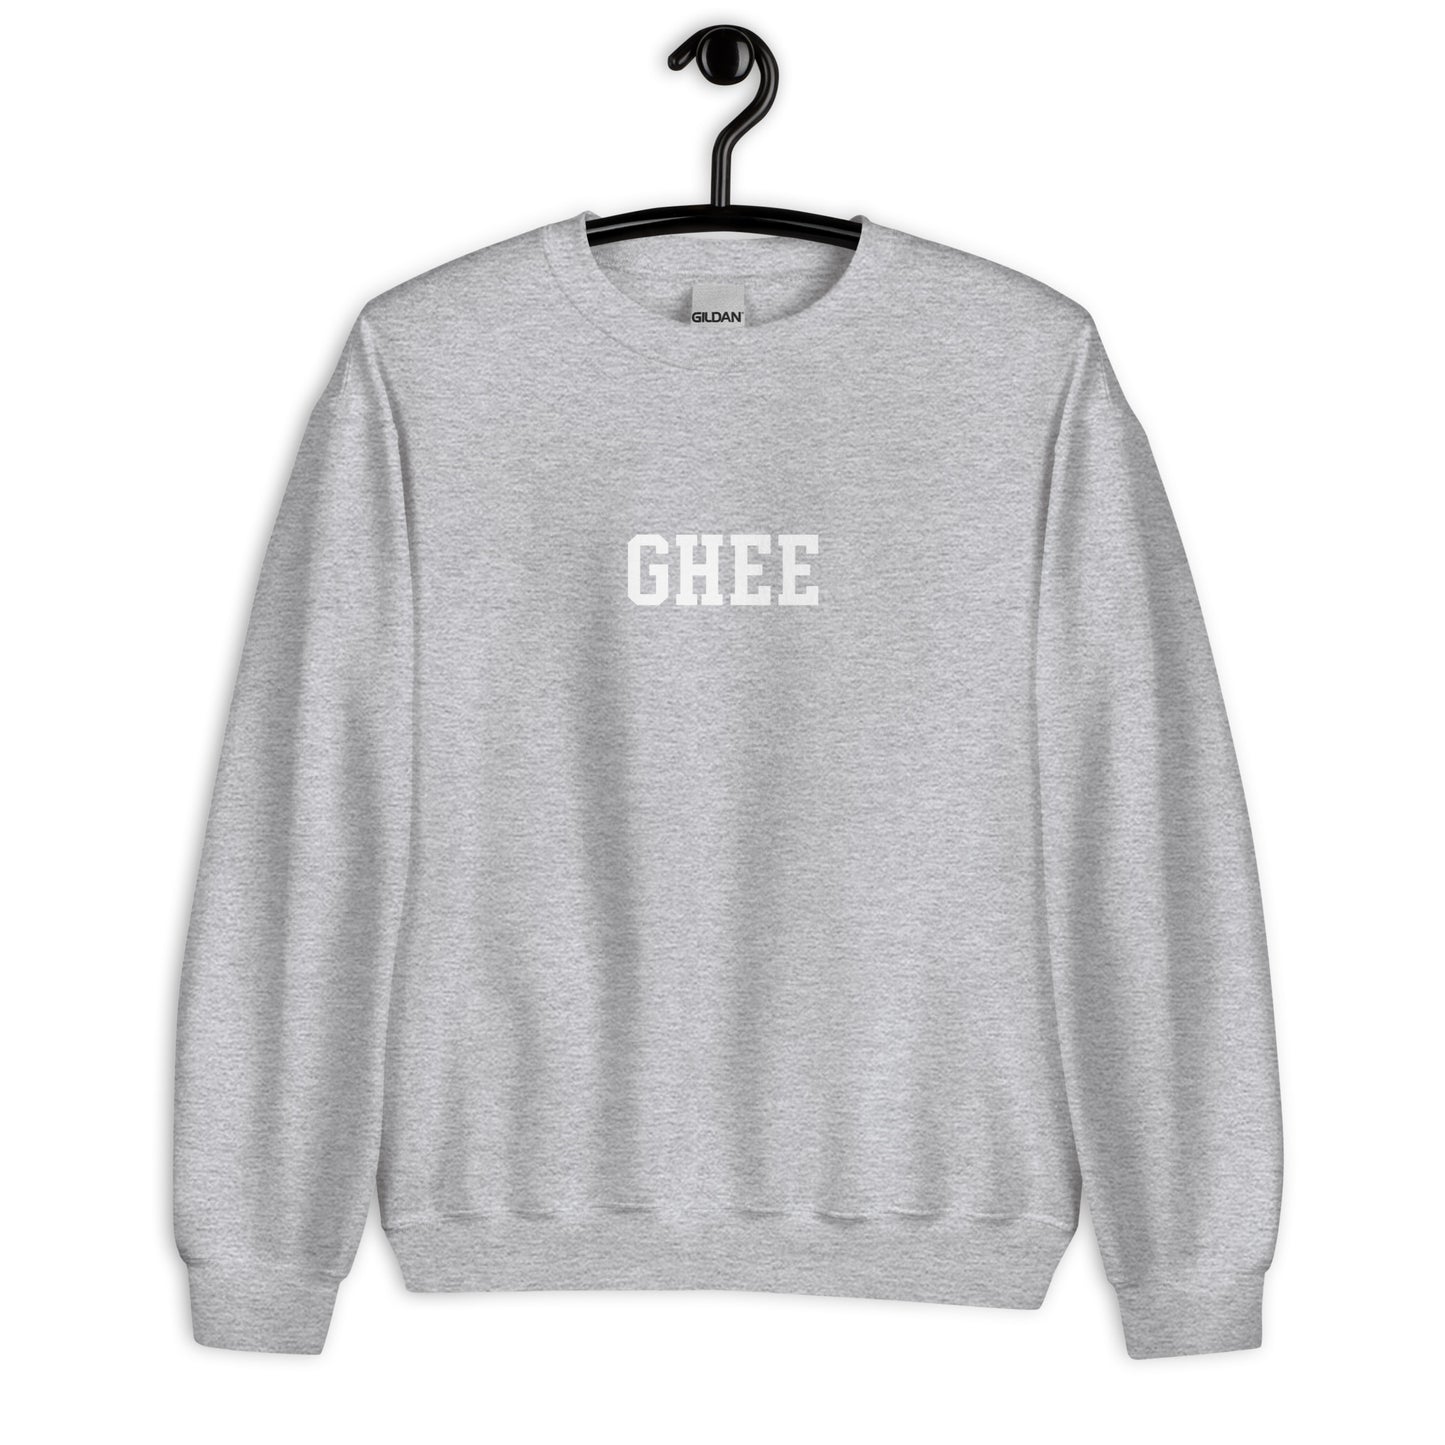 Ghee Sweatshirt - Straight Font